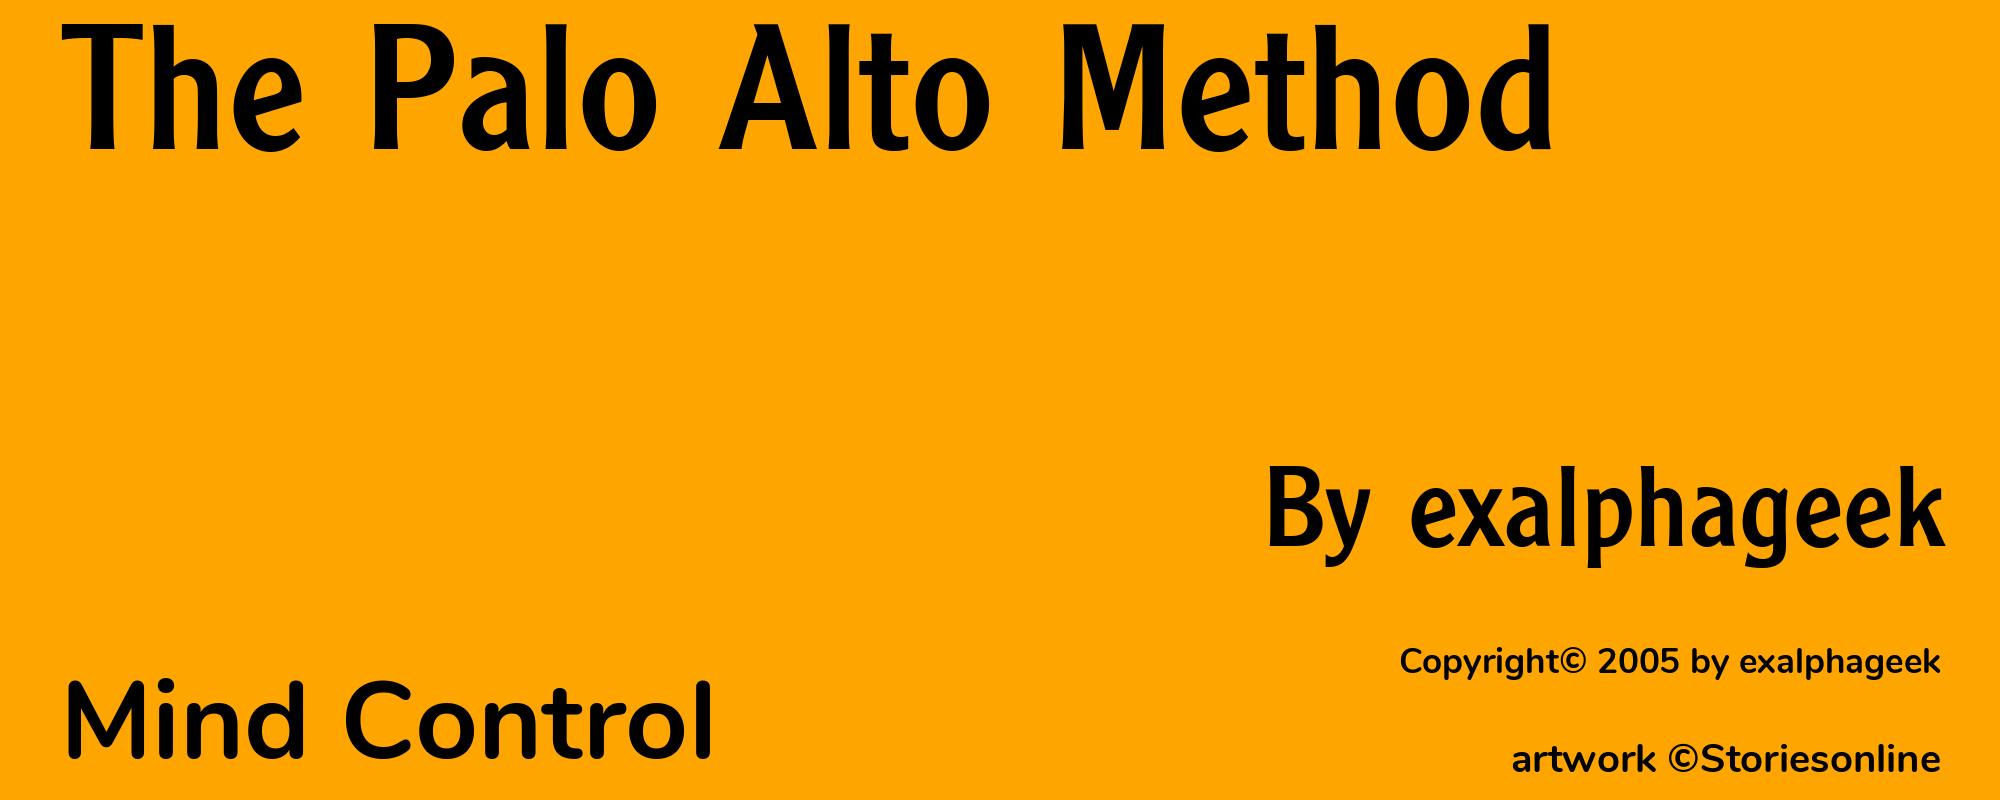 The Palo Alto Method - Cover